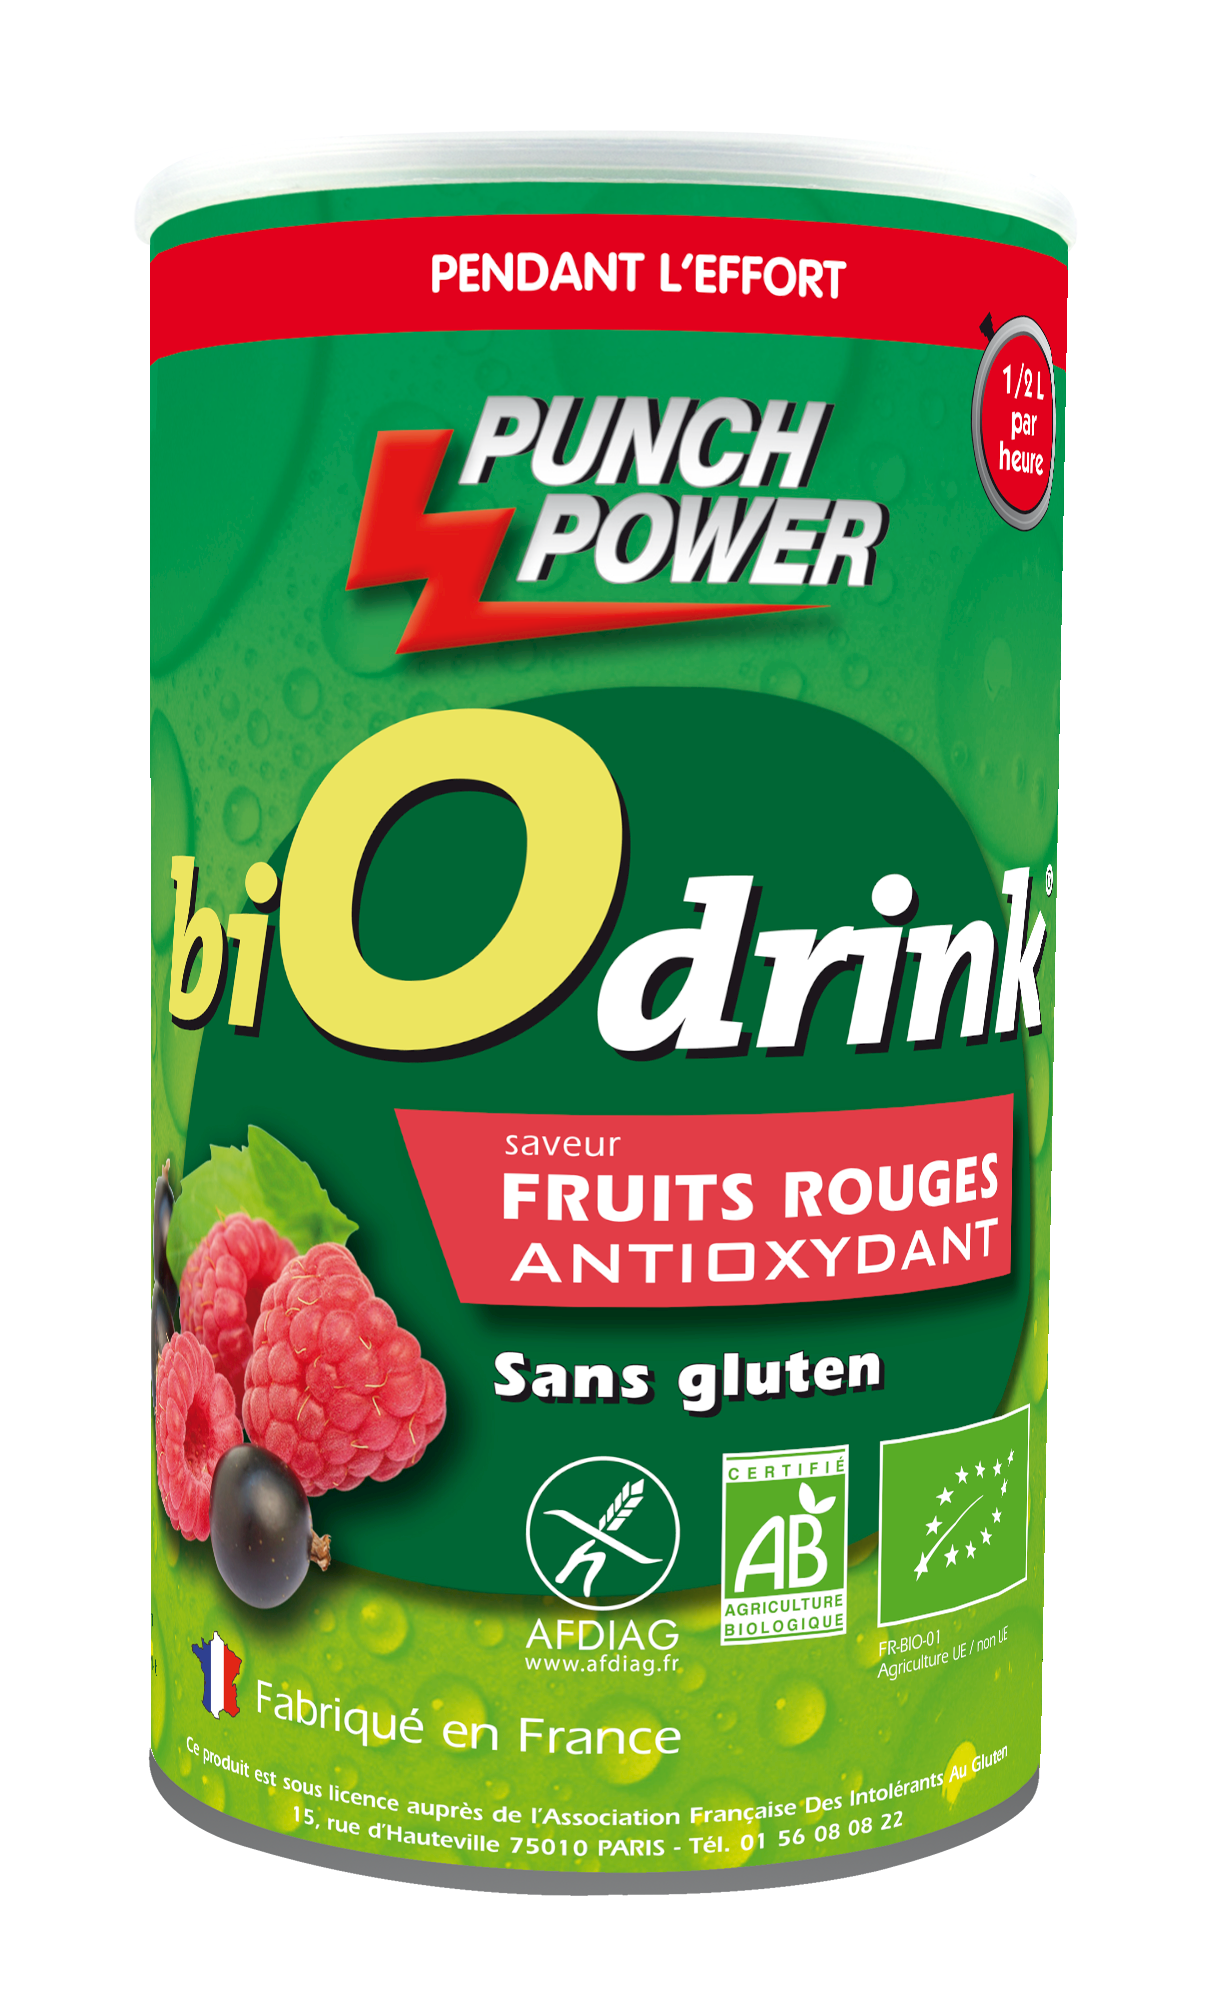 Punch Power - BiOdrink Antioxydant Fruits rouges sans gluten